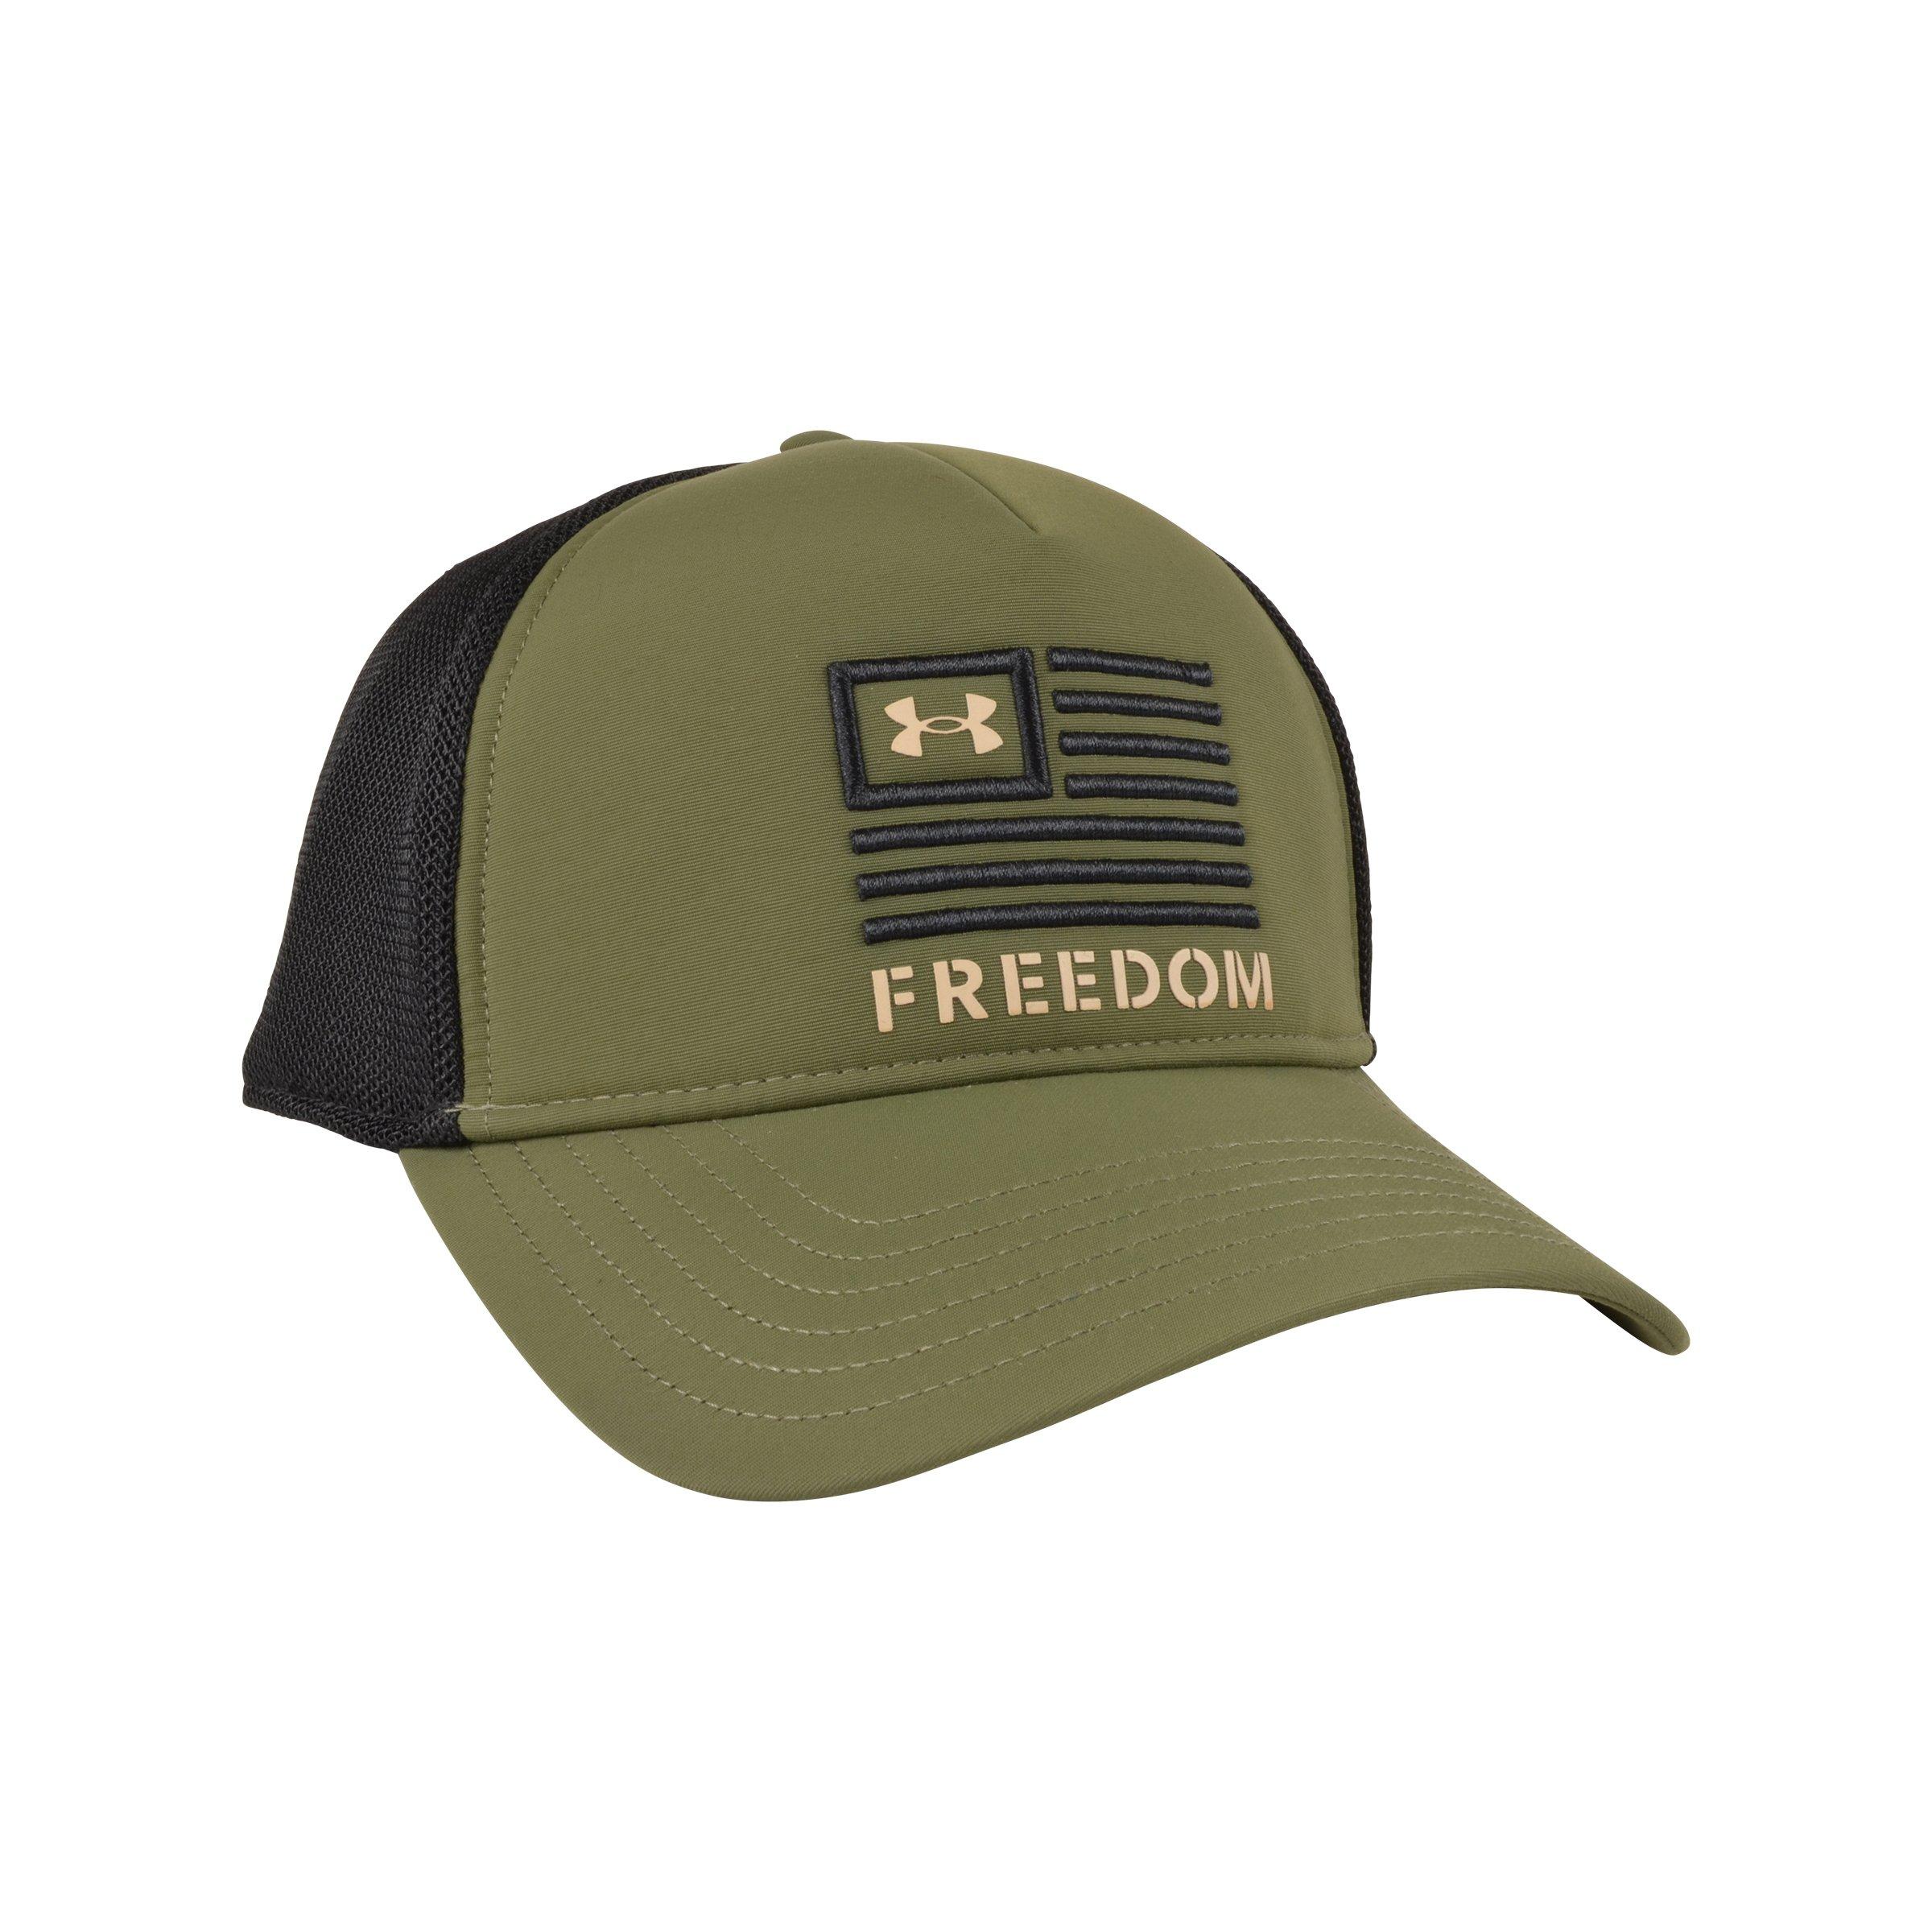 Under Armour Men's Freedom Trucker Snapback Hat - Marine OD Green